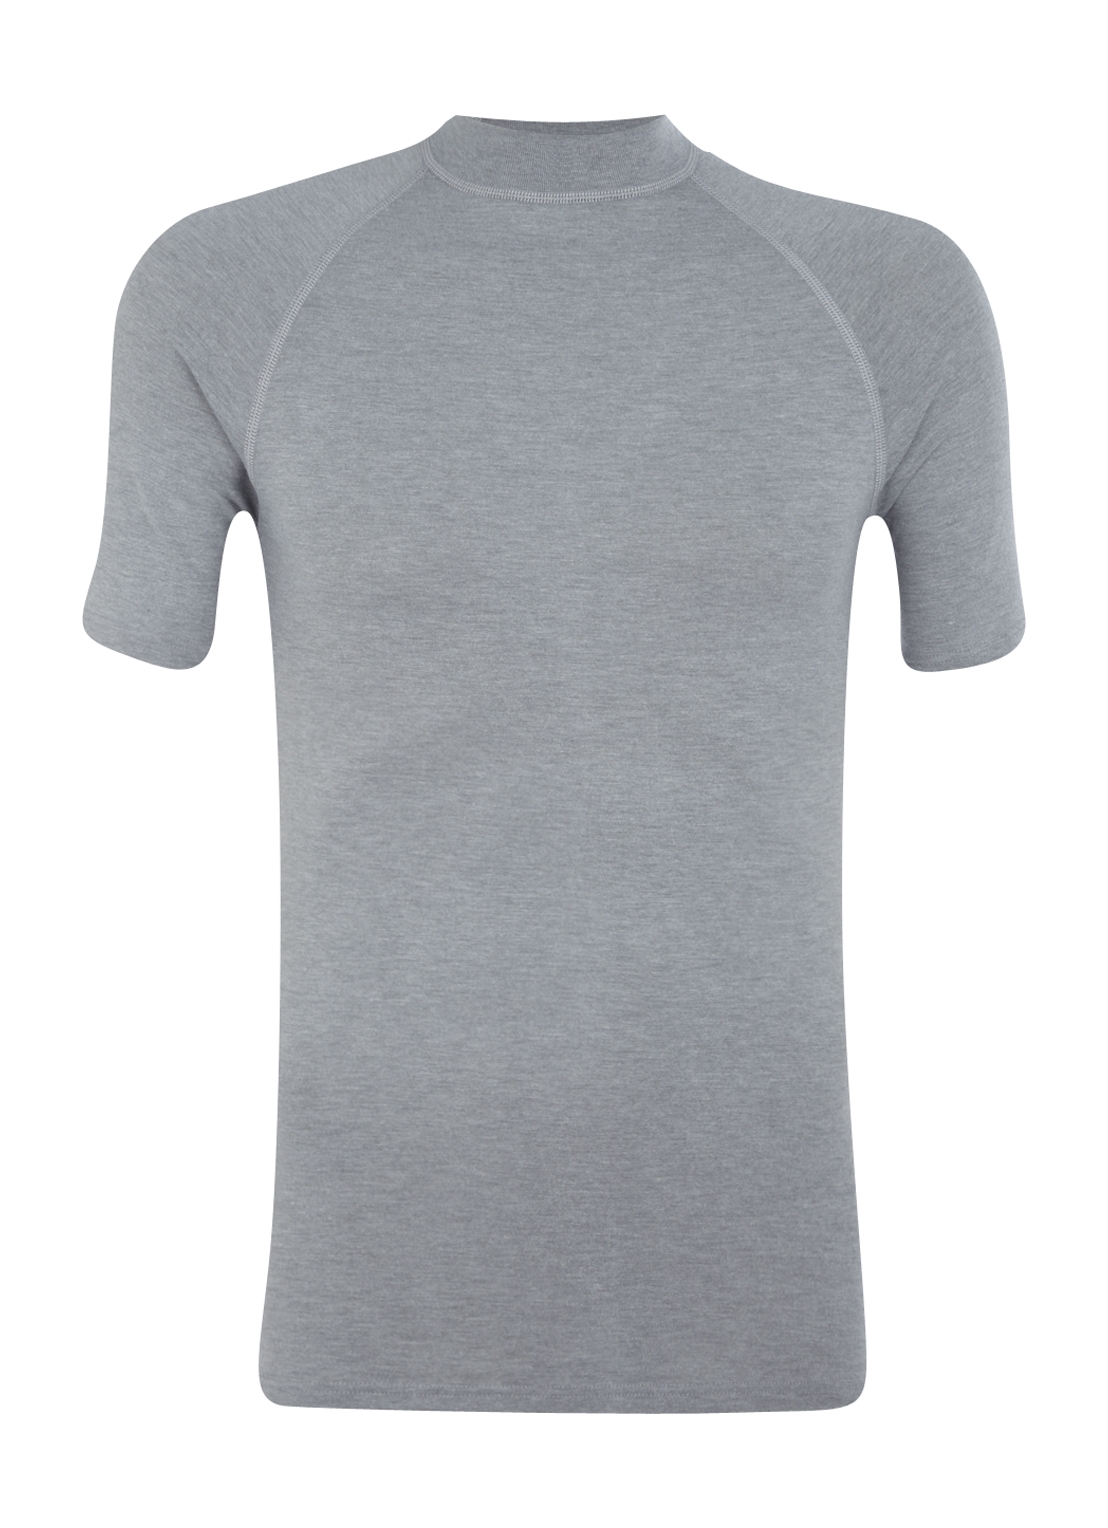 RJ Bodywear, thermo T-shirt, grijs